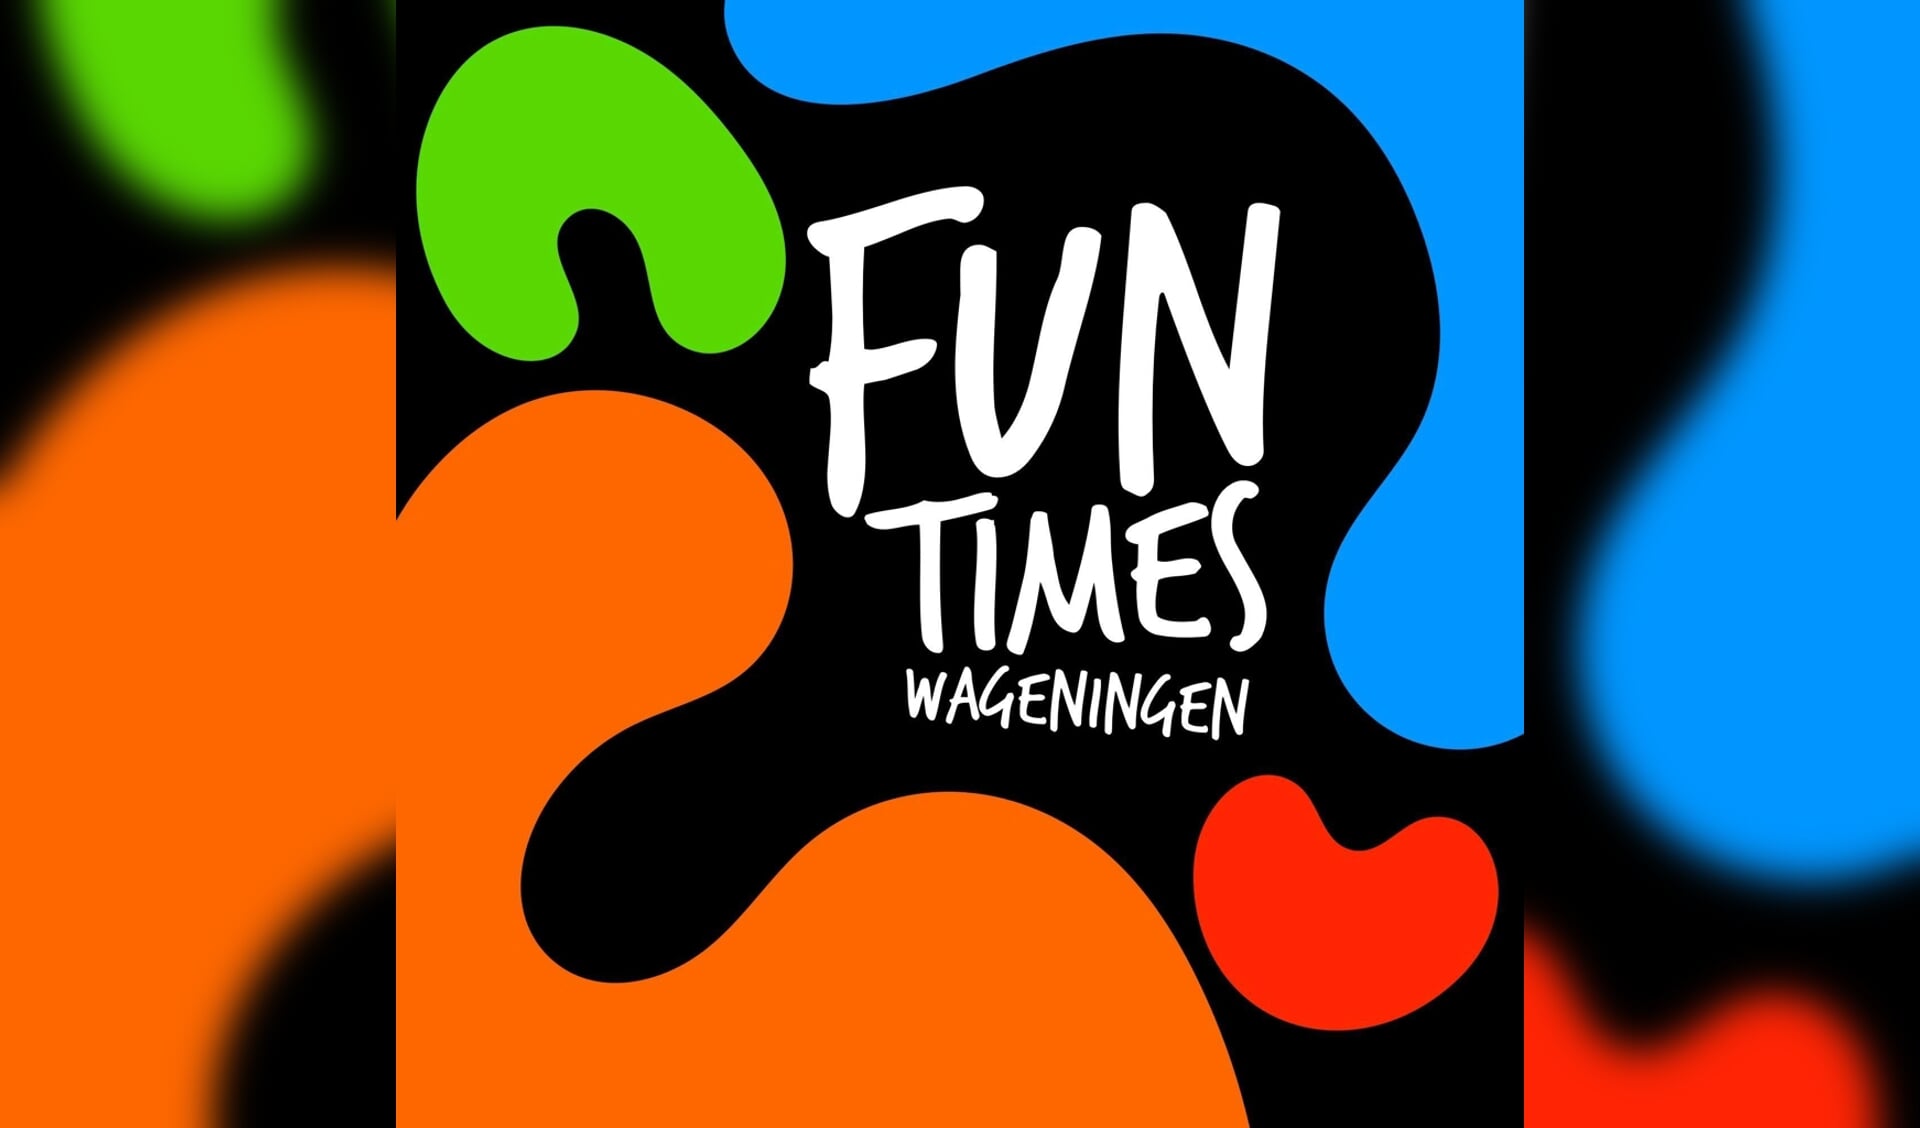 Fun Times Wageningen - Shows every Sunday